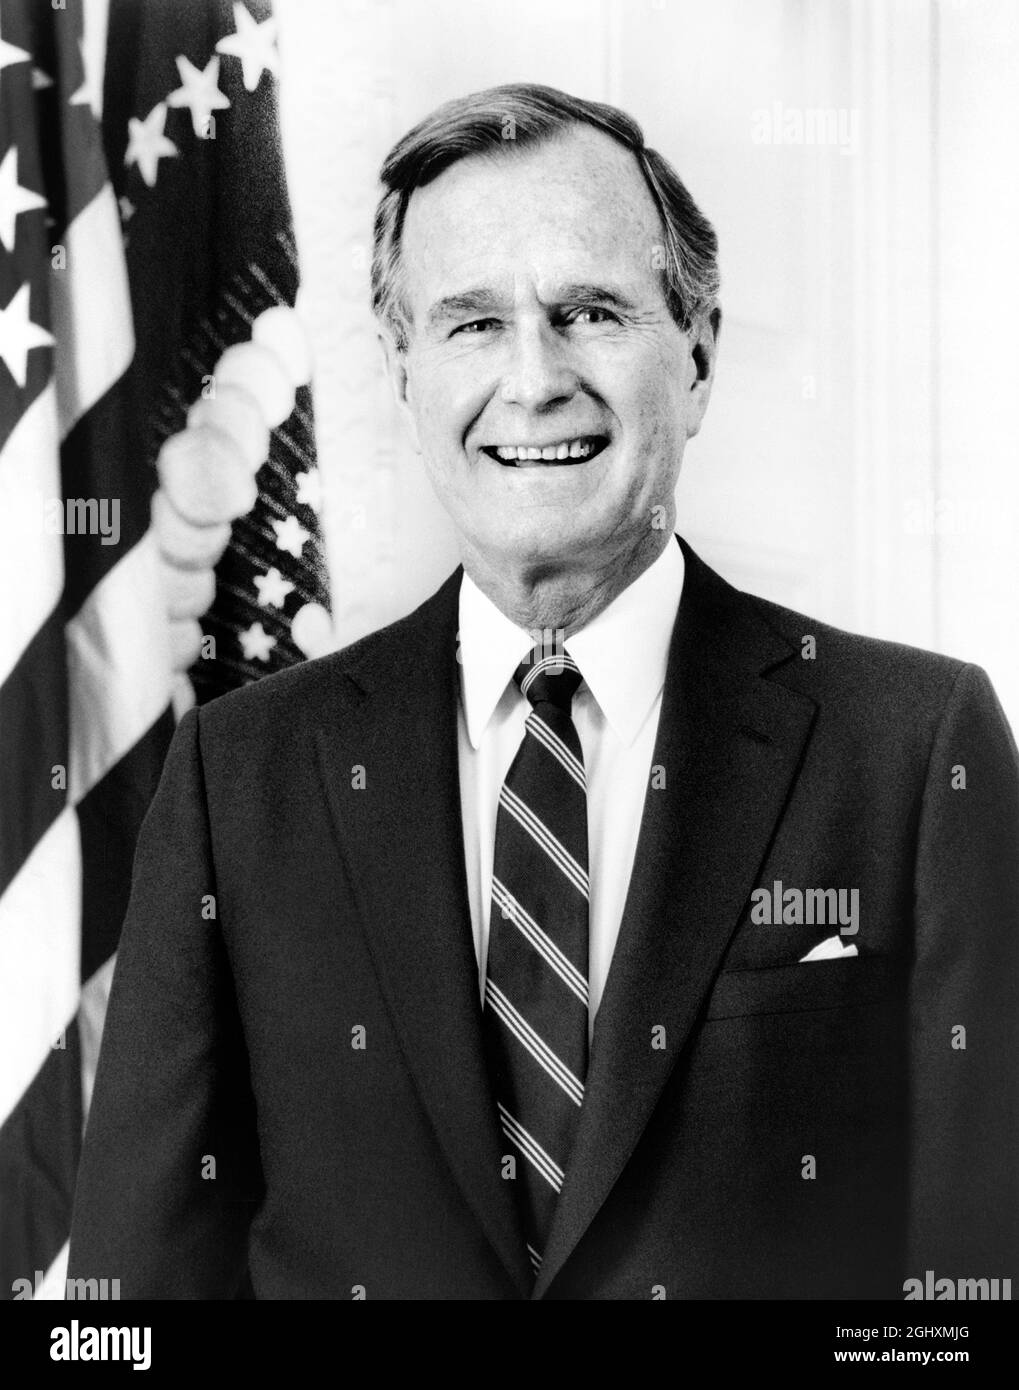 US-Präsident George H.W. Bush, halblanges Porträt neben amerikanischer Flagge, Washington, D.C., USA, David Valdez, 1989 Stockfoto